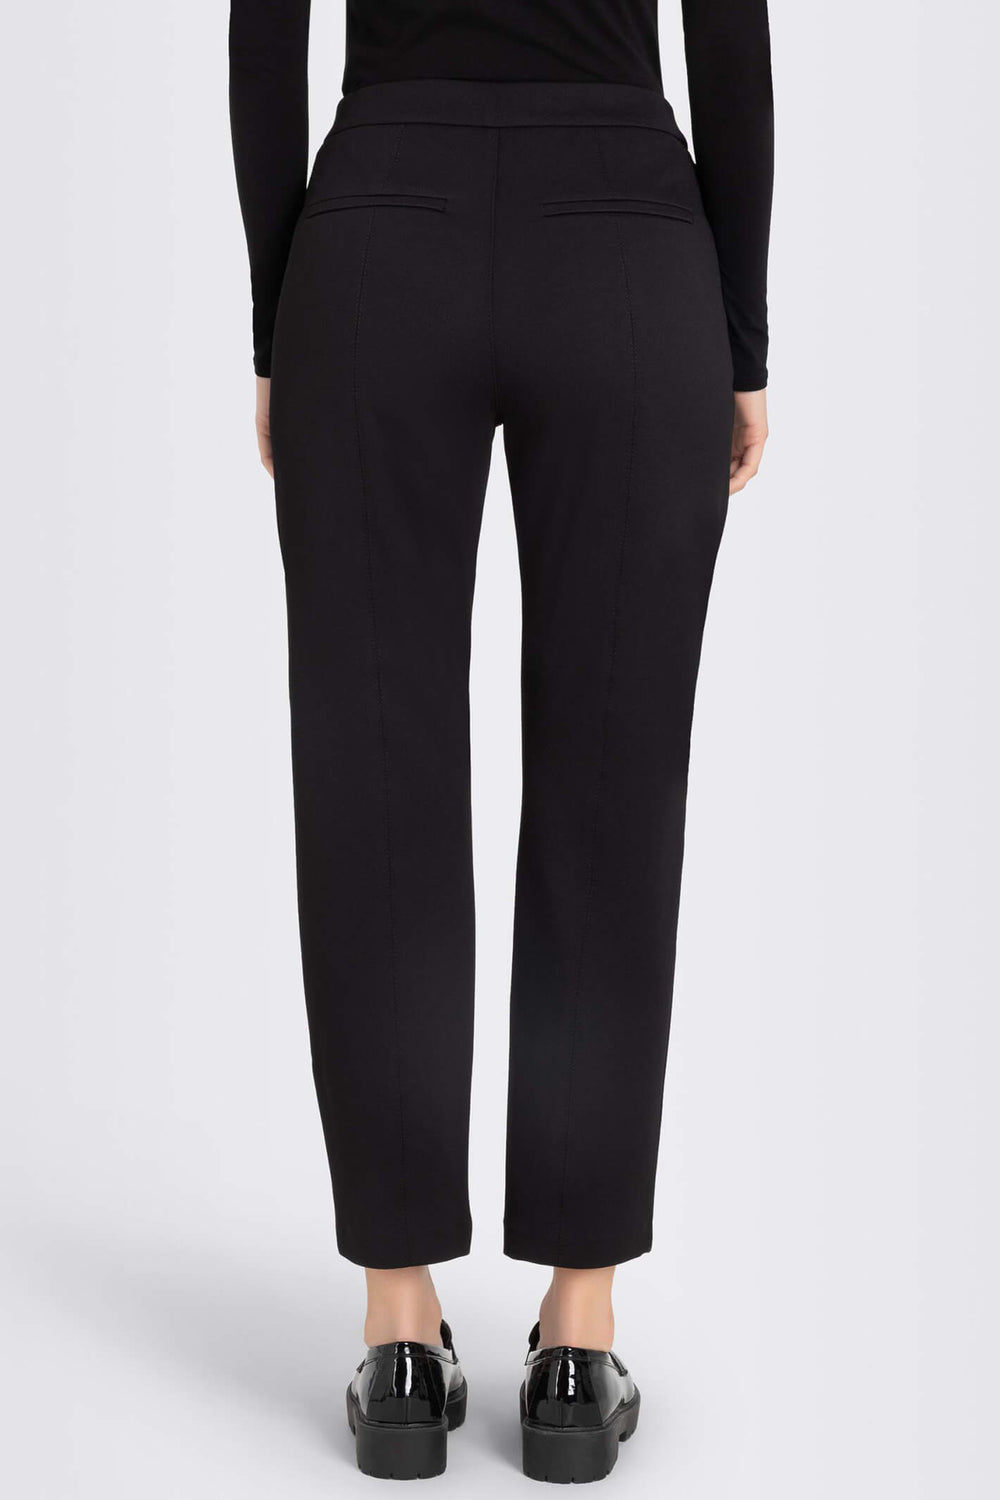 Mac Chino Flex 2134-00-0172L Black Bi-Stretch Pull On Trousers - Olivia Grace Fashion